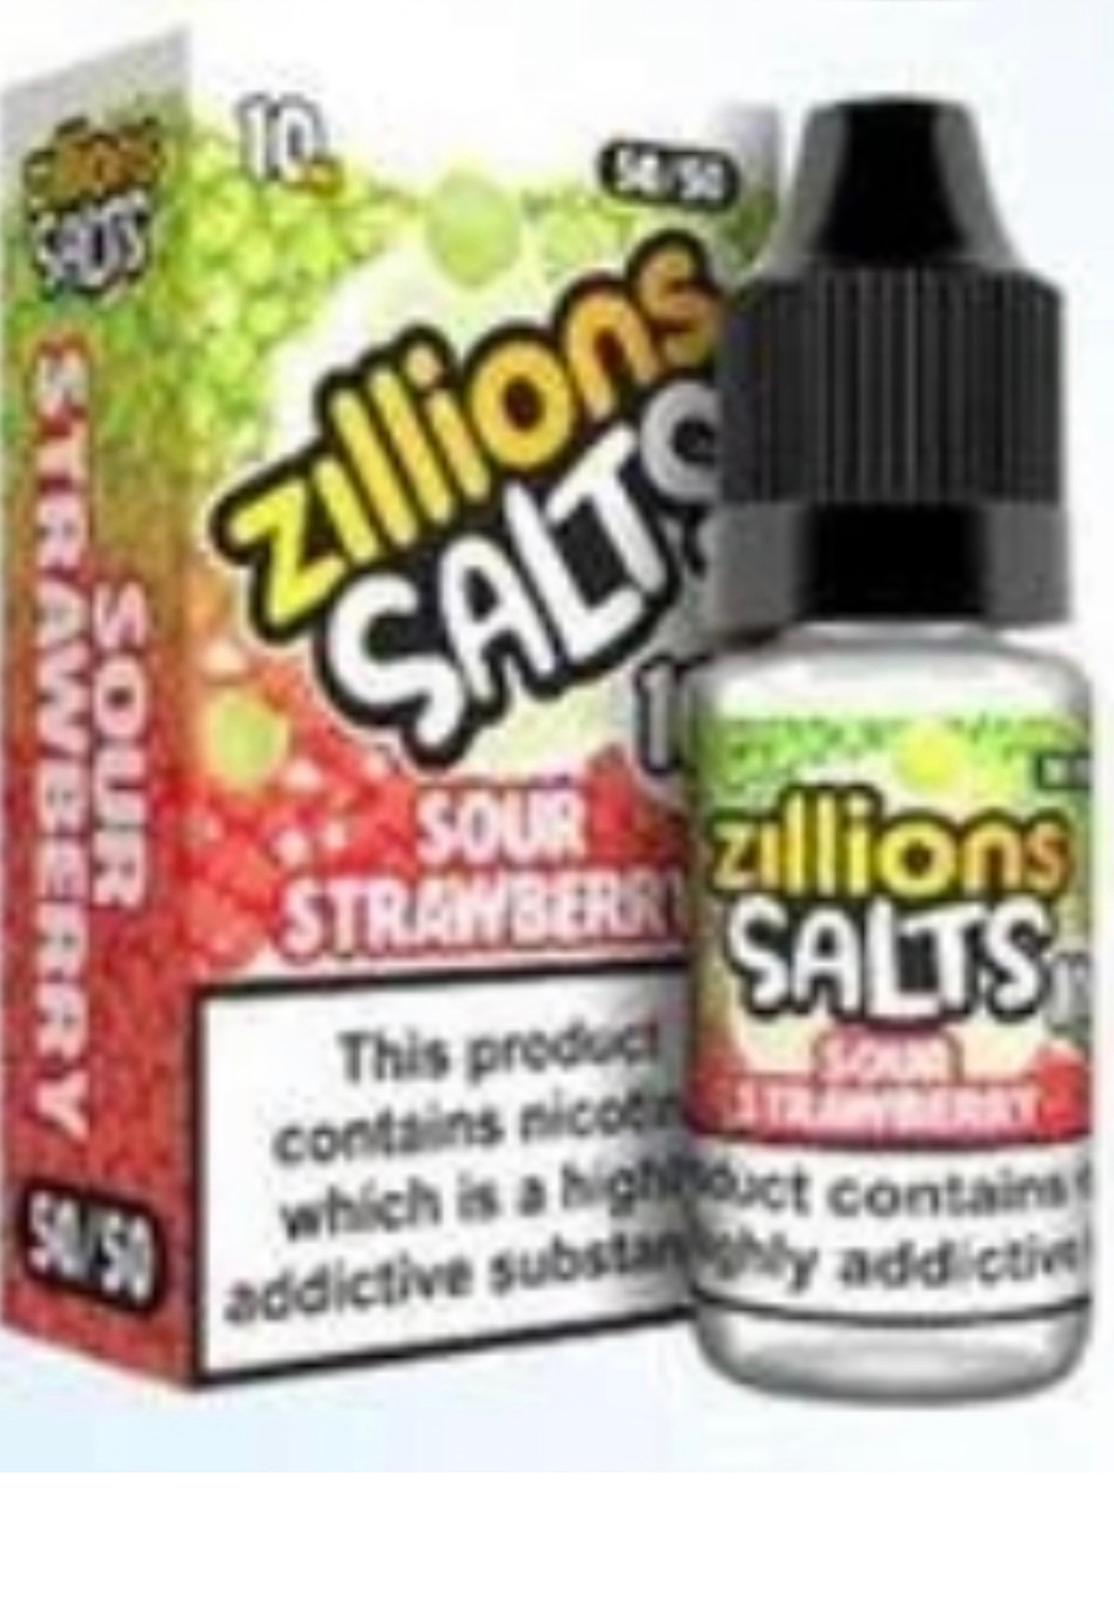 Sour Strawberry Zillions 10ml Nic Salt 20mg